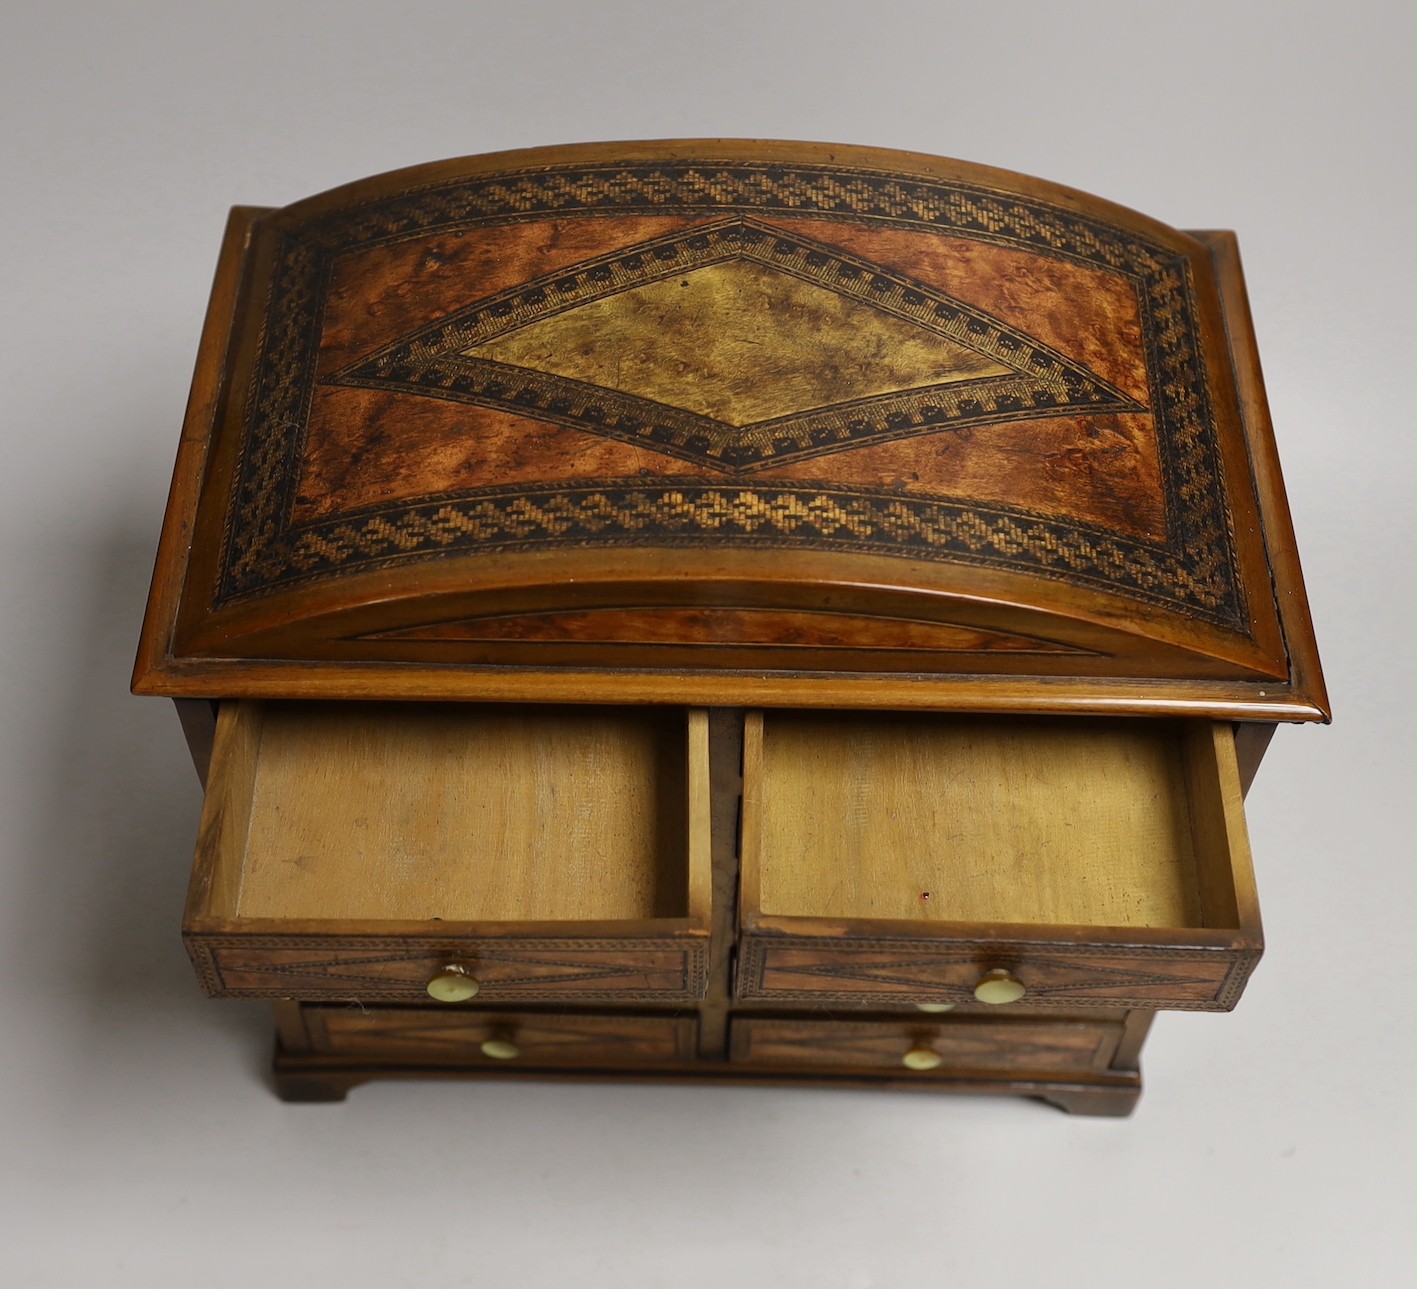 A Sorrento inlaid bird’s eye maple ten drawer miniature chest, 27cms x wide 26.5 cms high